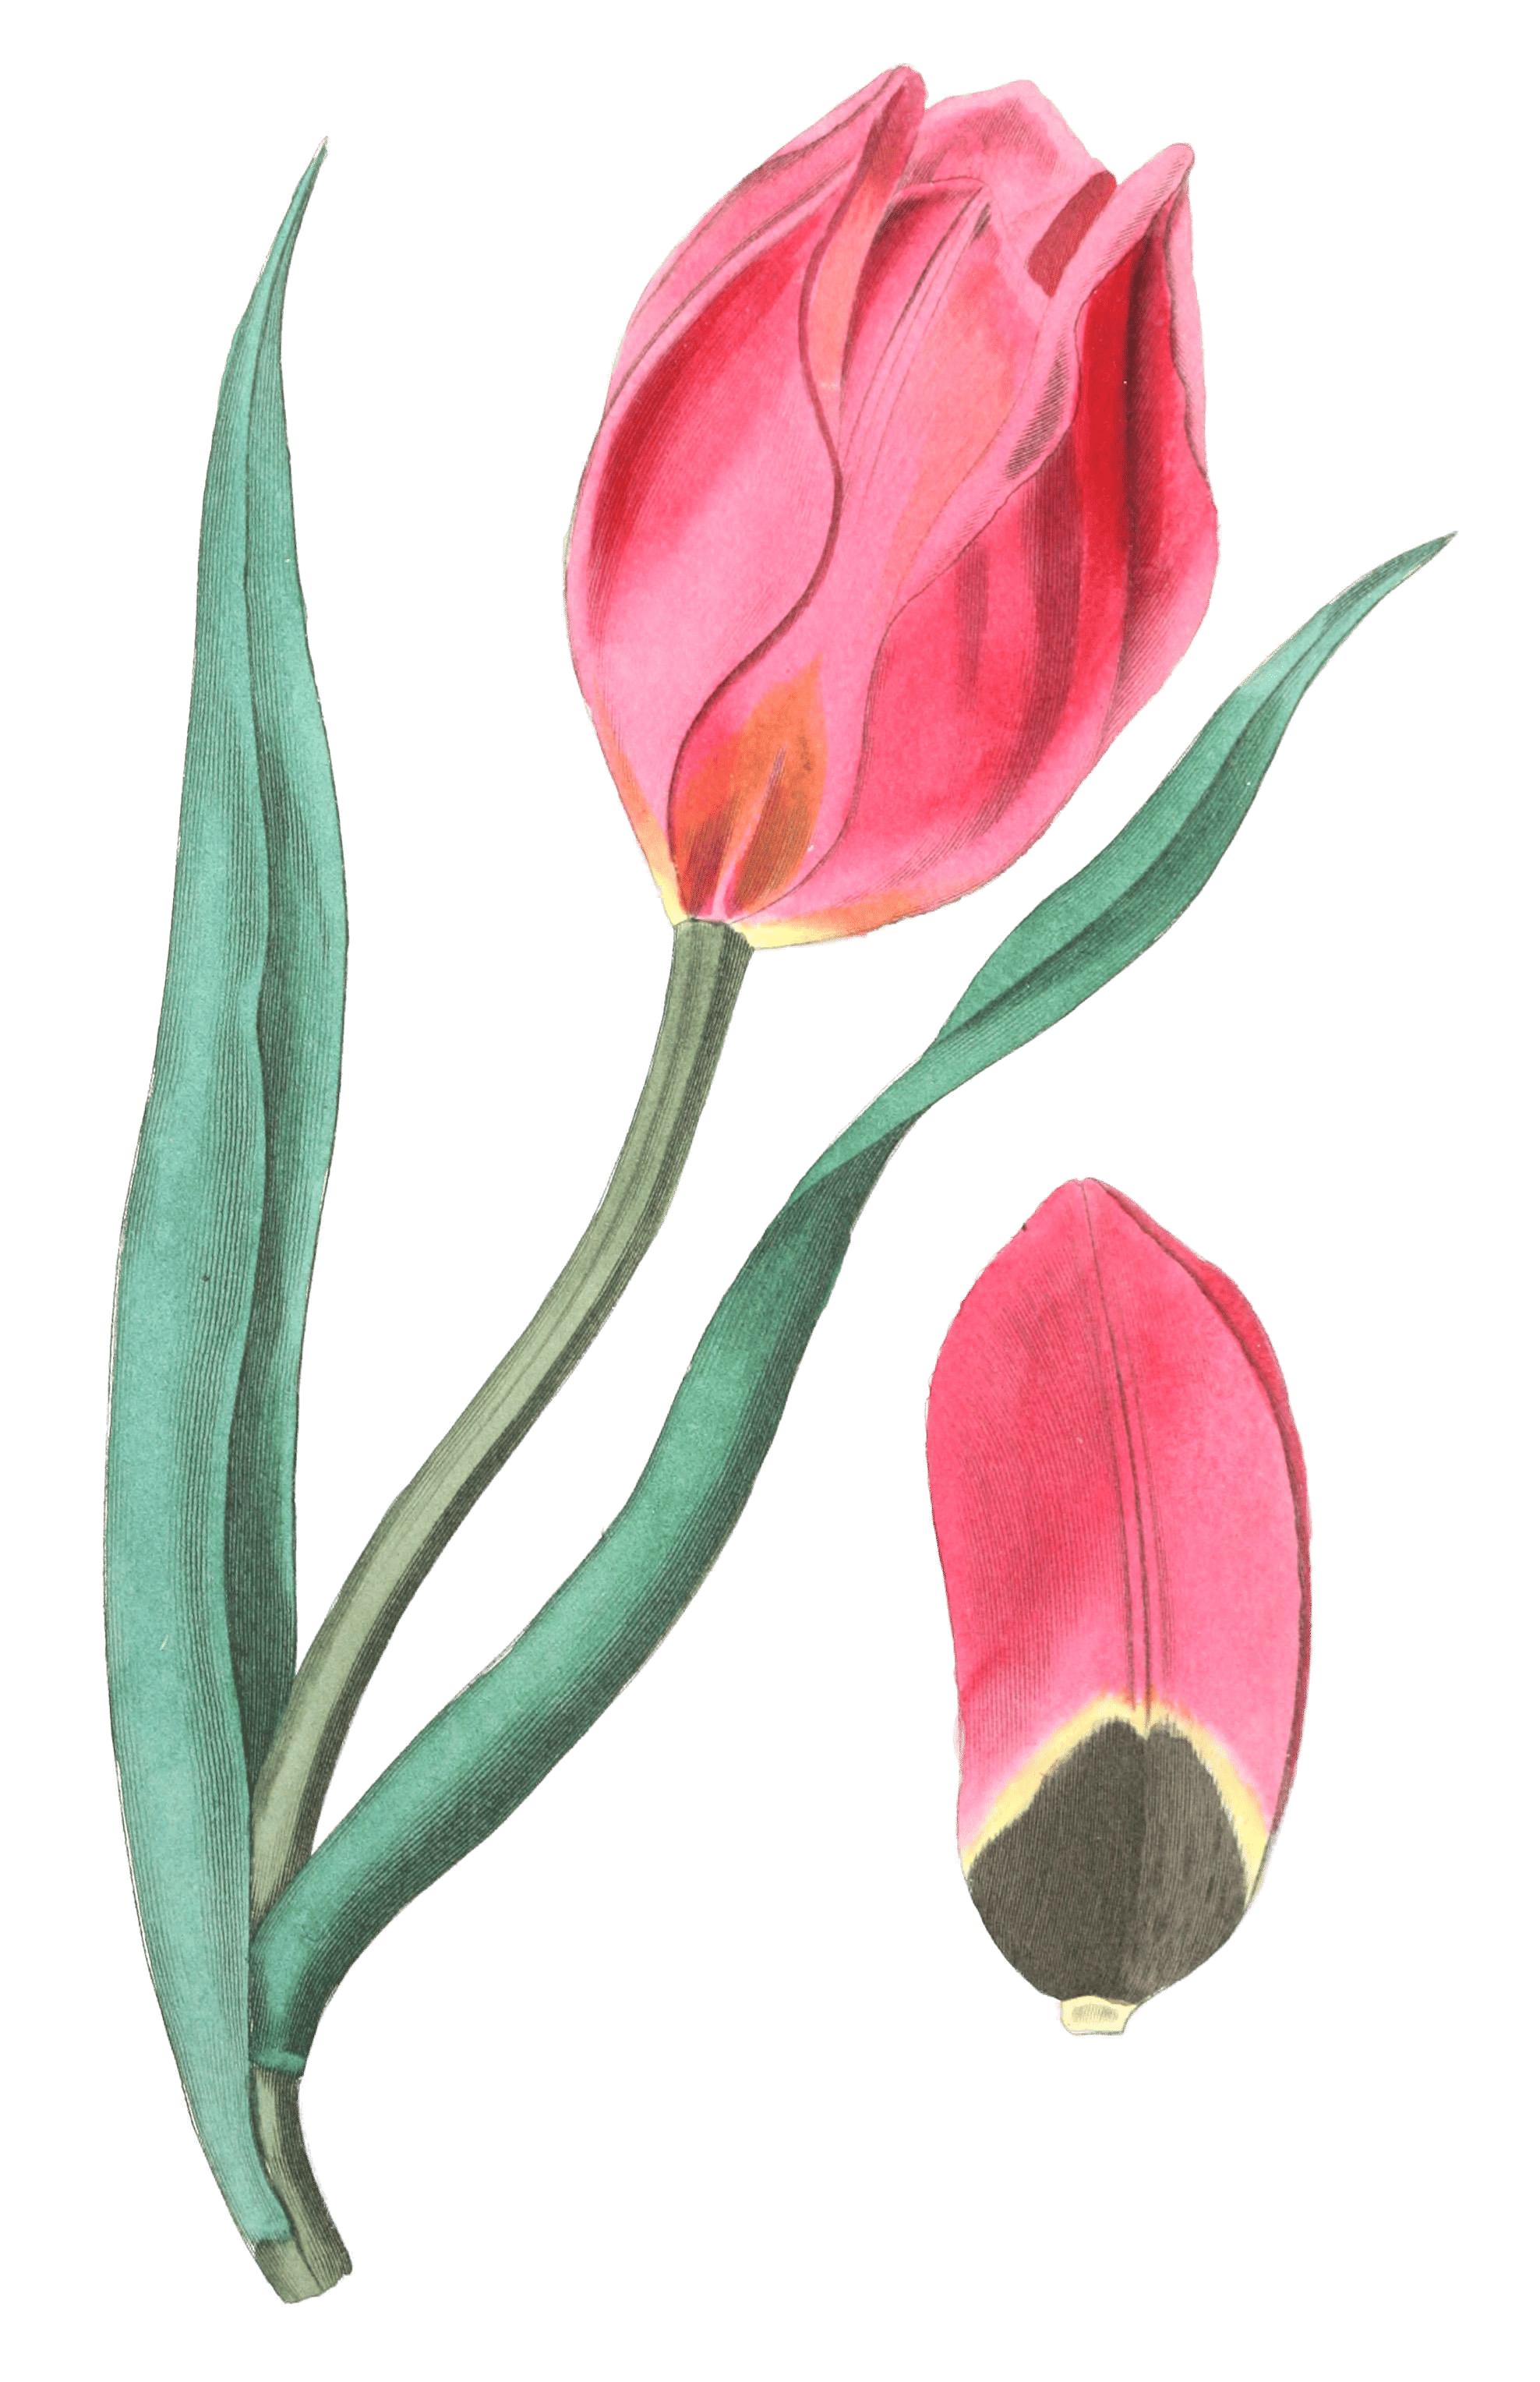 The Early Suns Eye Tulip